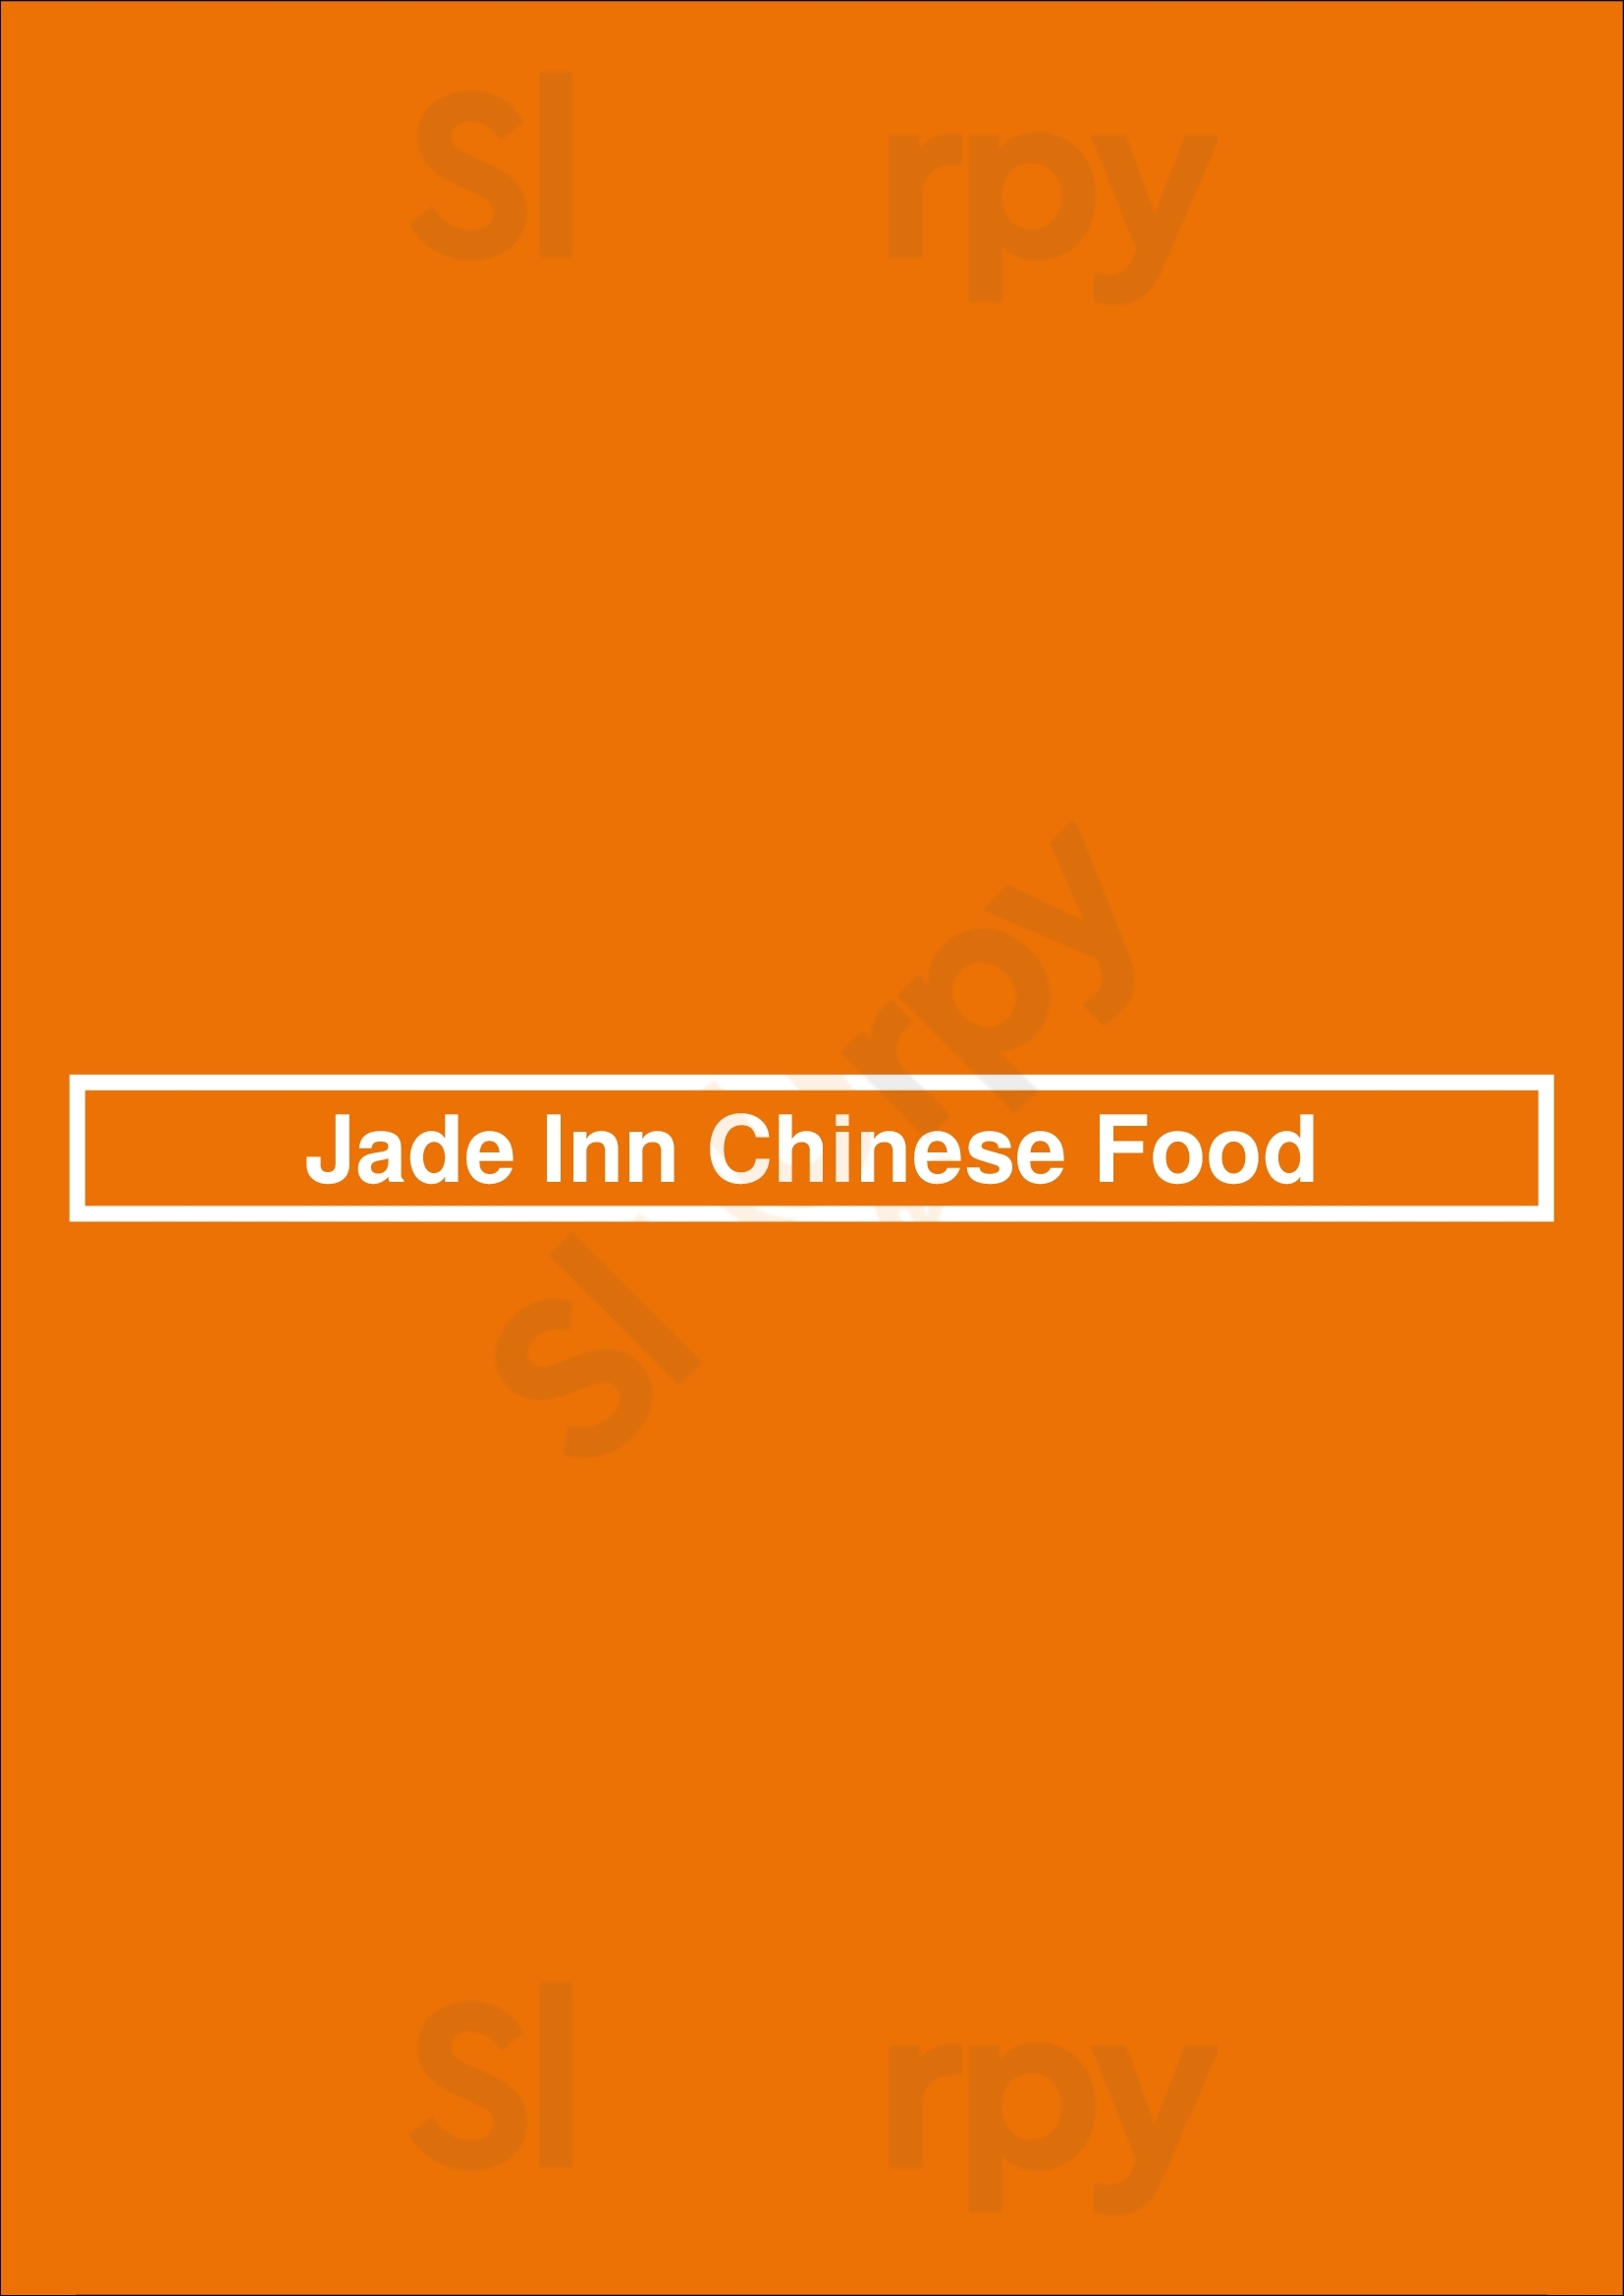 Jade Inn Chinese Food Winnipeg Menu - 1